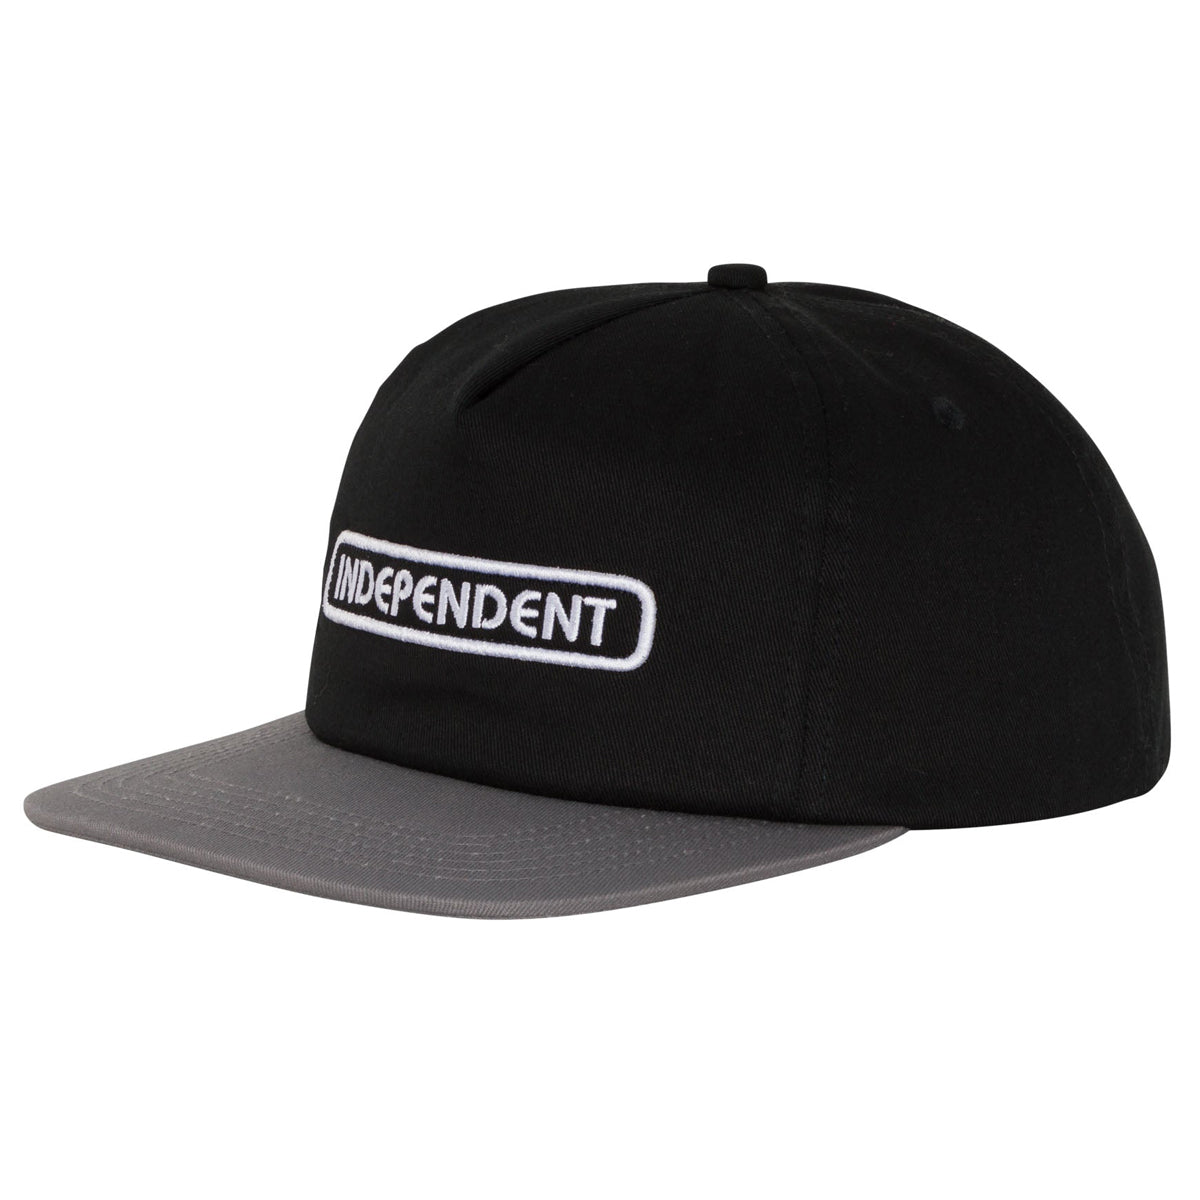 Independent B/C Groundwork Snapback Hat - Charcoal/Black image 1